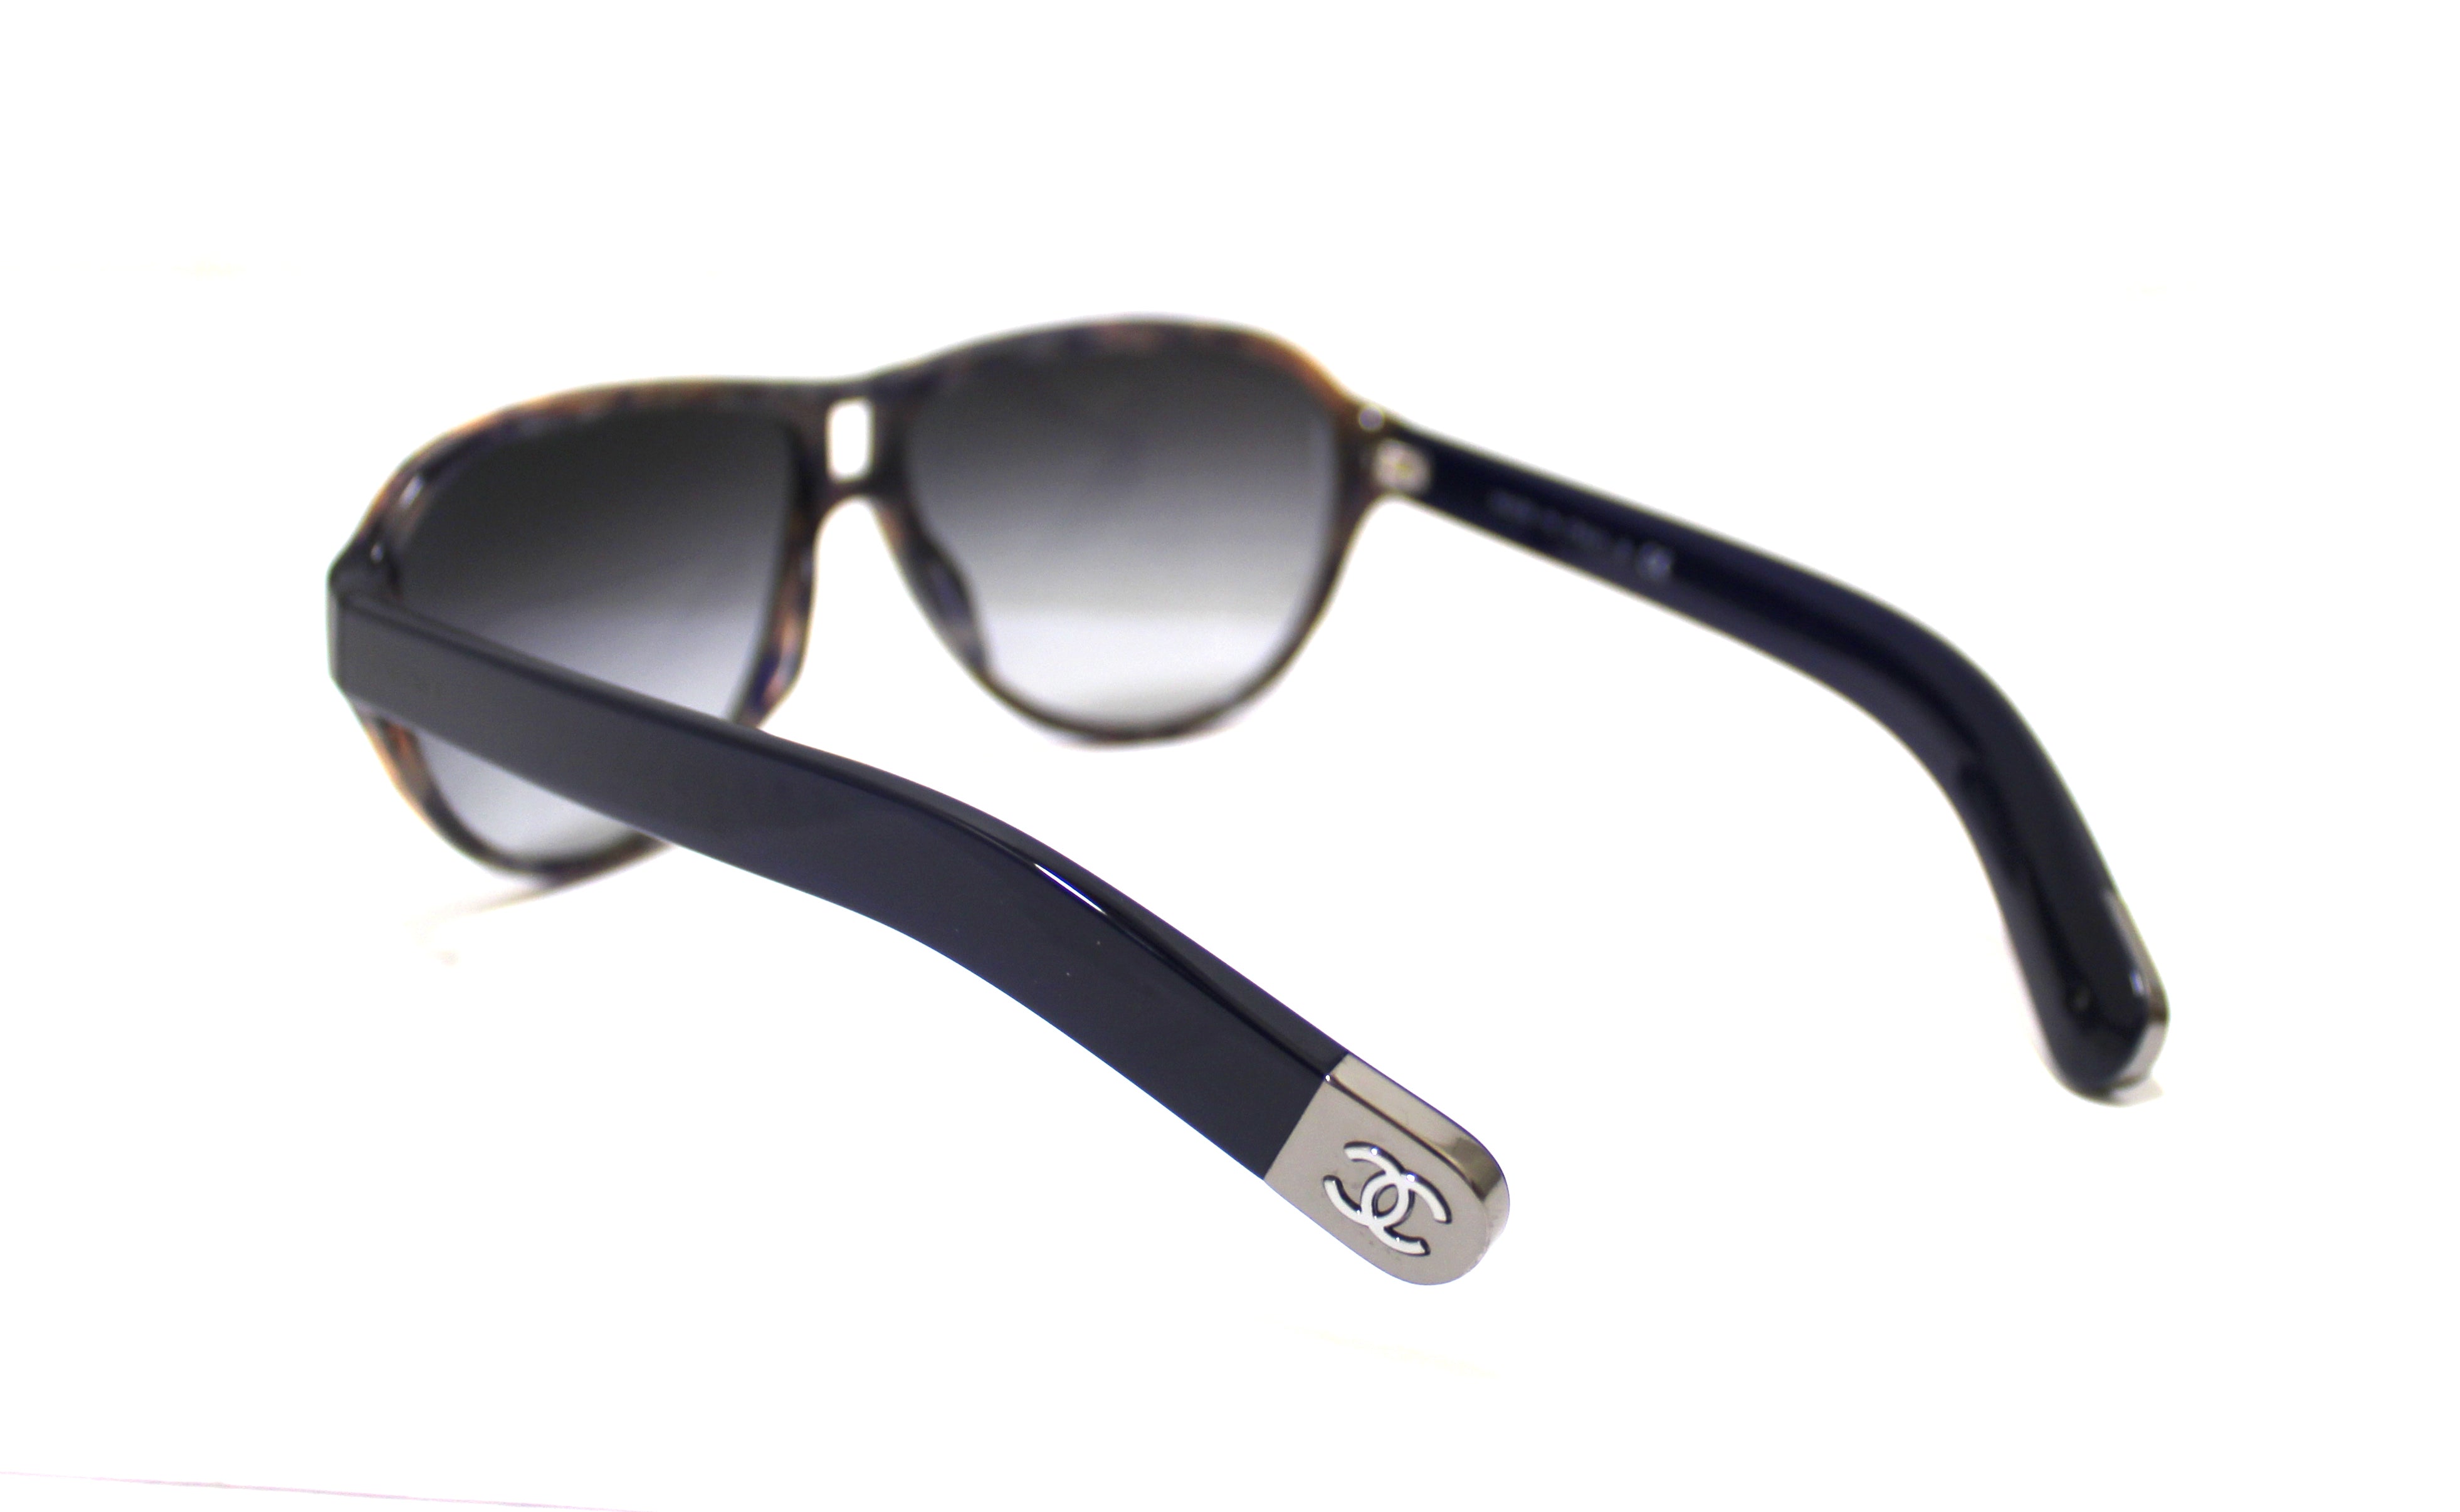 Authentic Chanel Indigo framed sunglasses 5233-A